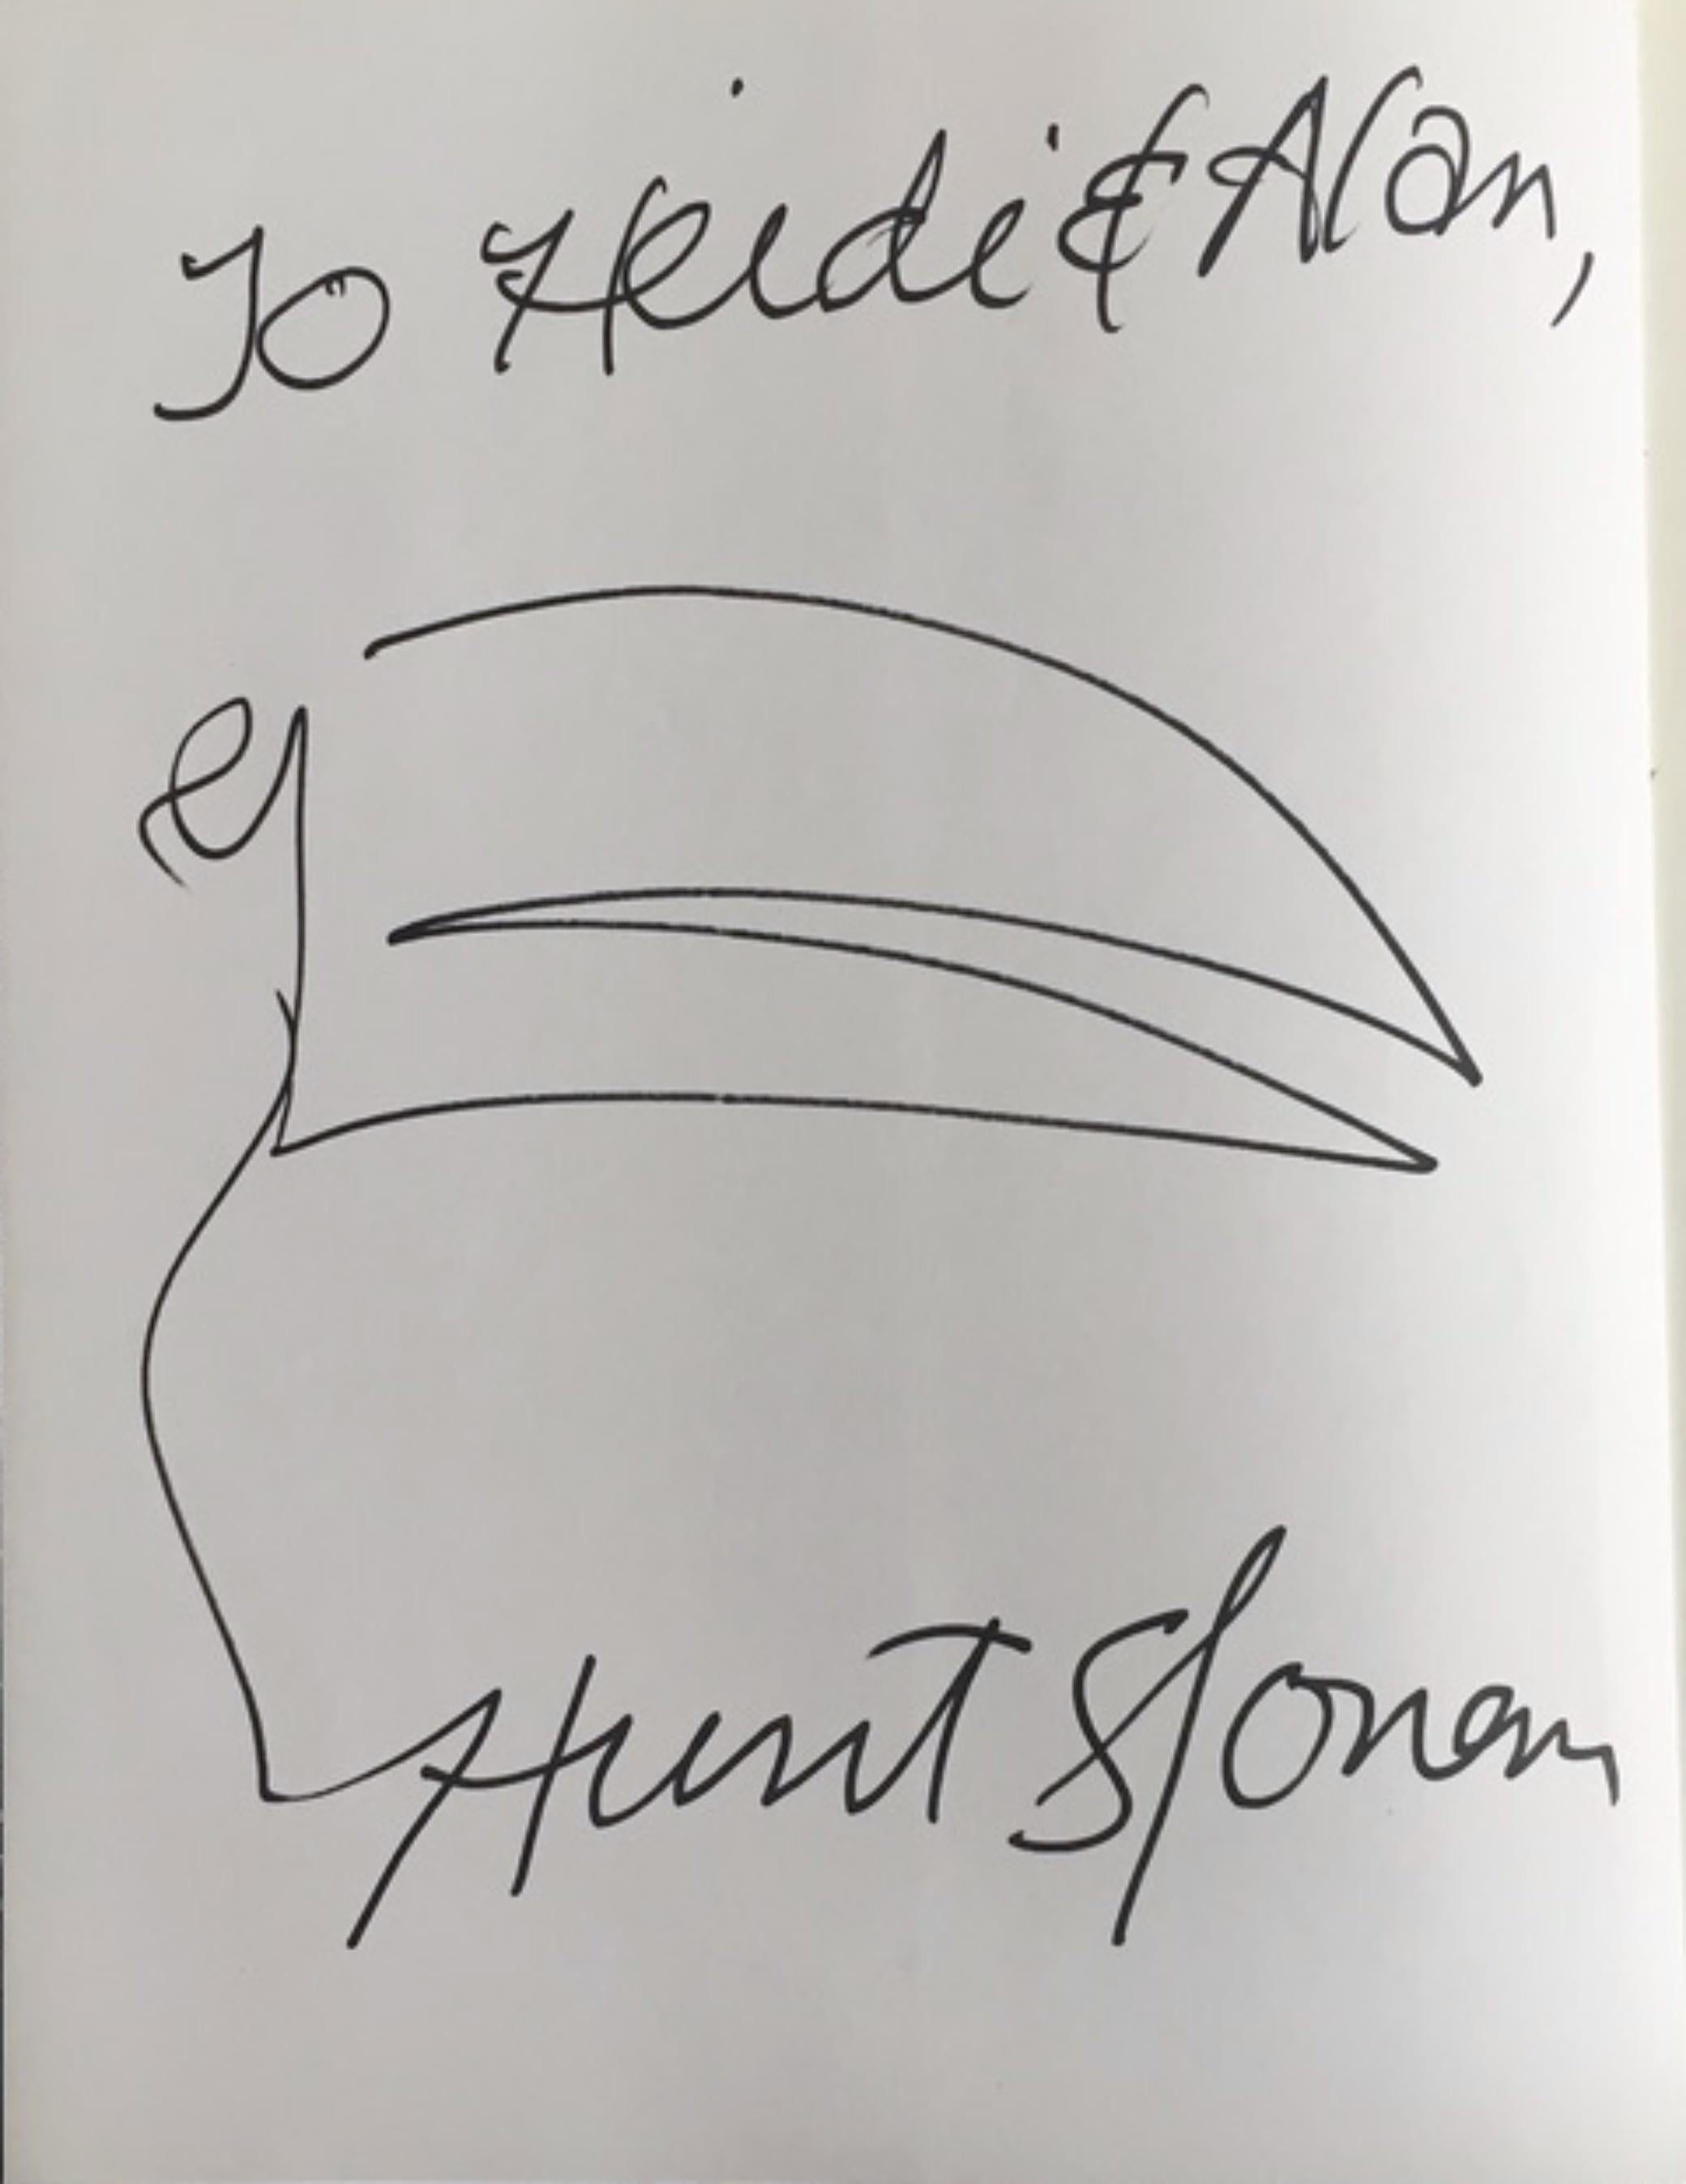 Toucan drawing, signed & inscribed in marker, held in elegant hardback monograph - Art by Hunt Slonem